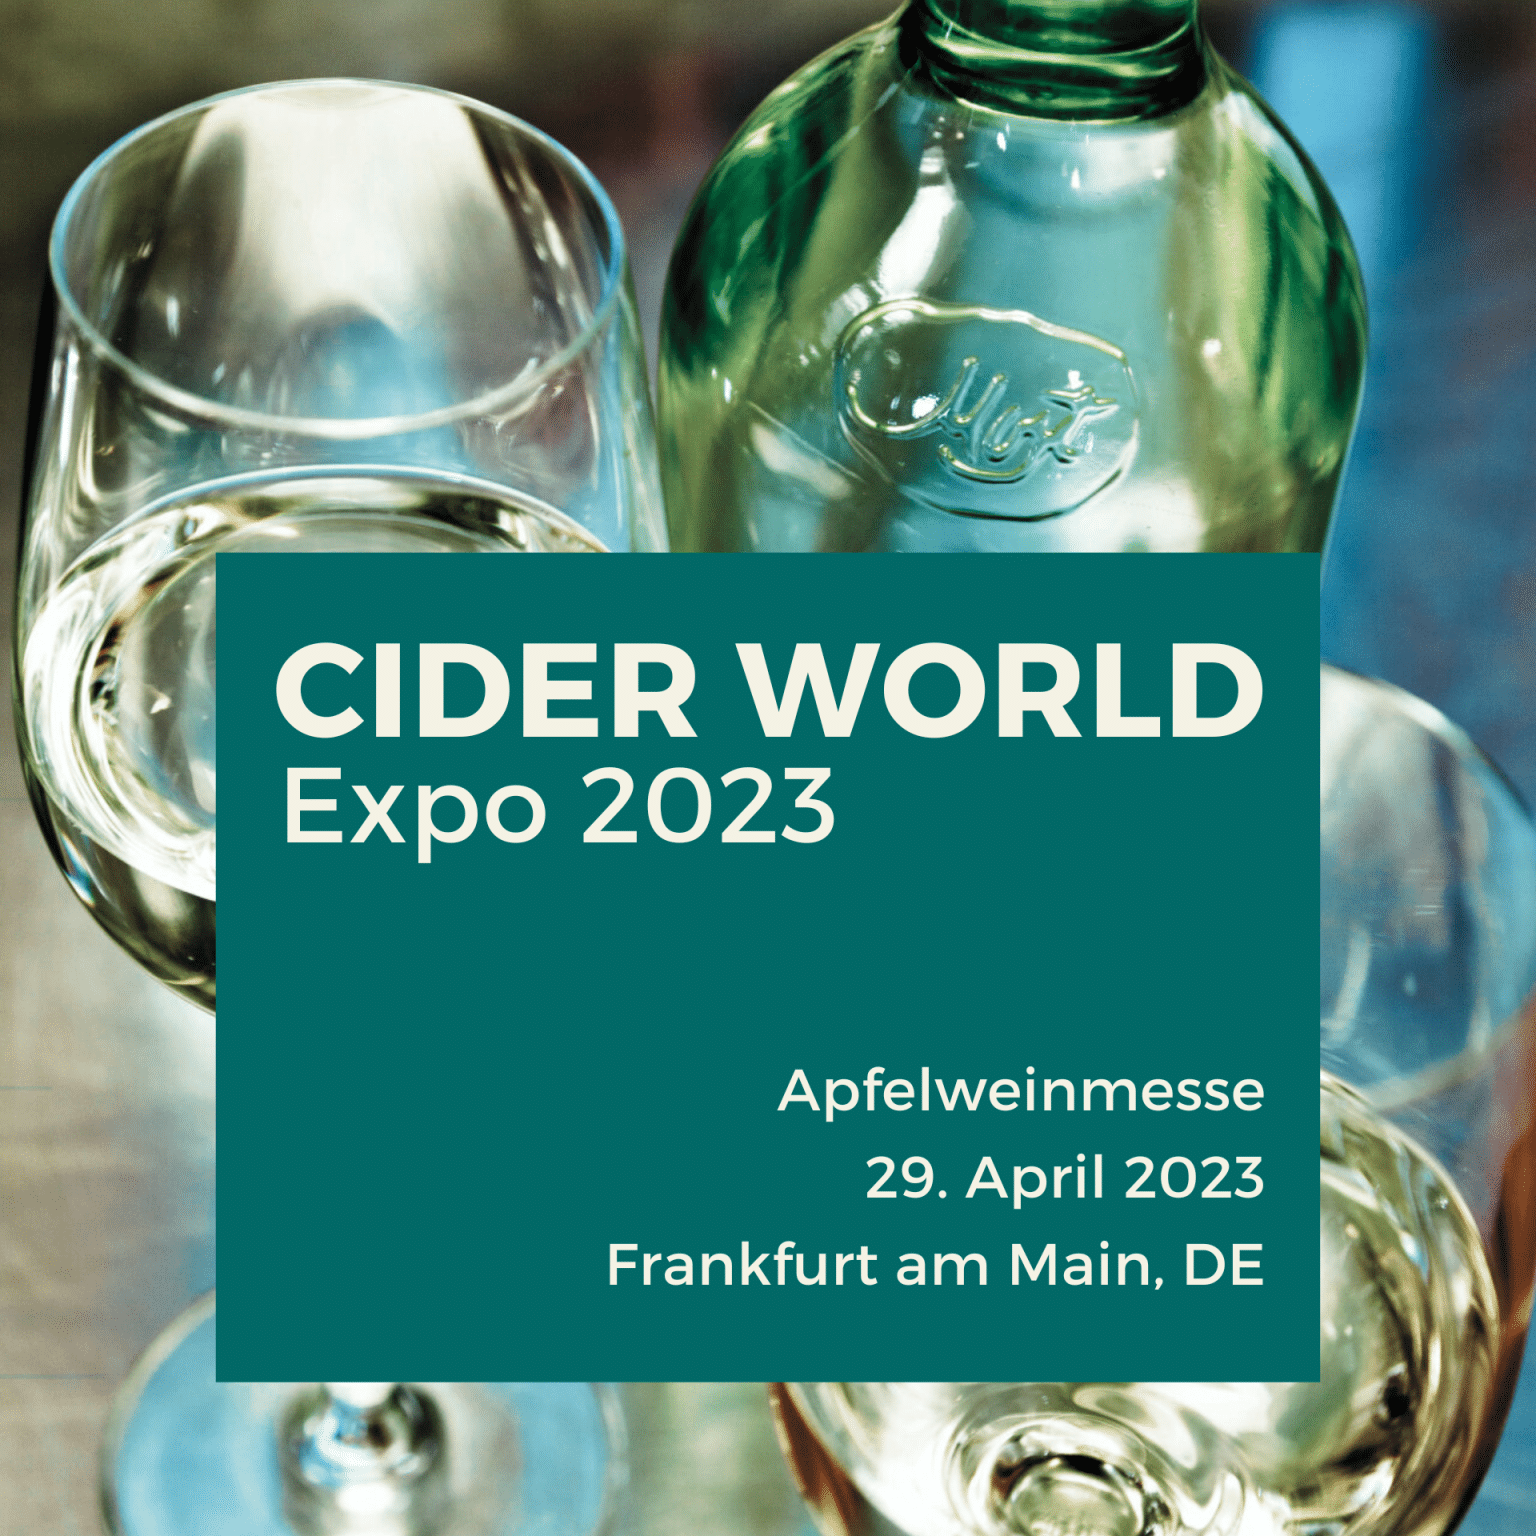 Cider World Expo 2023